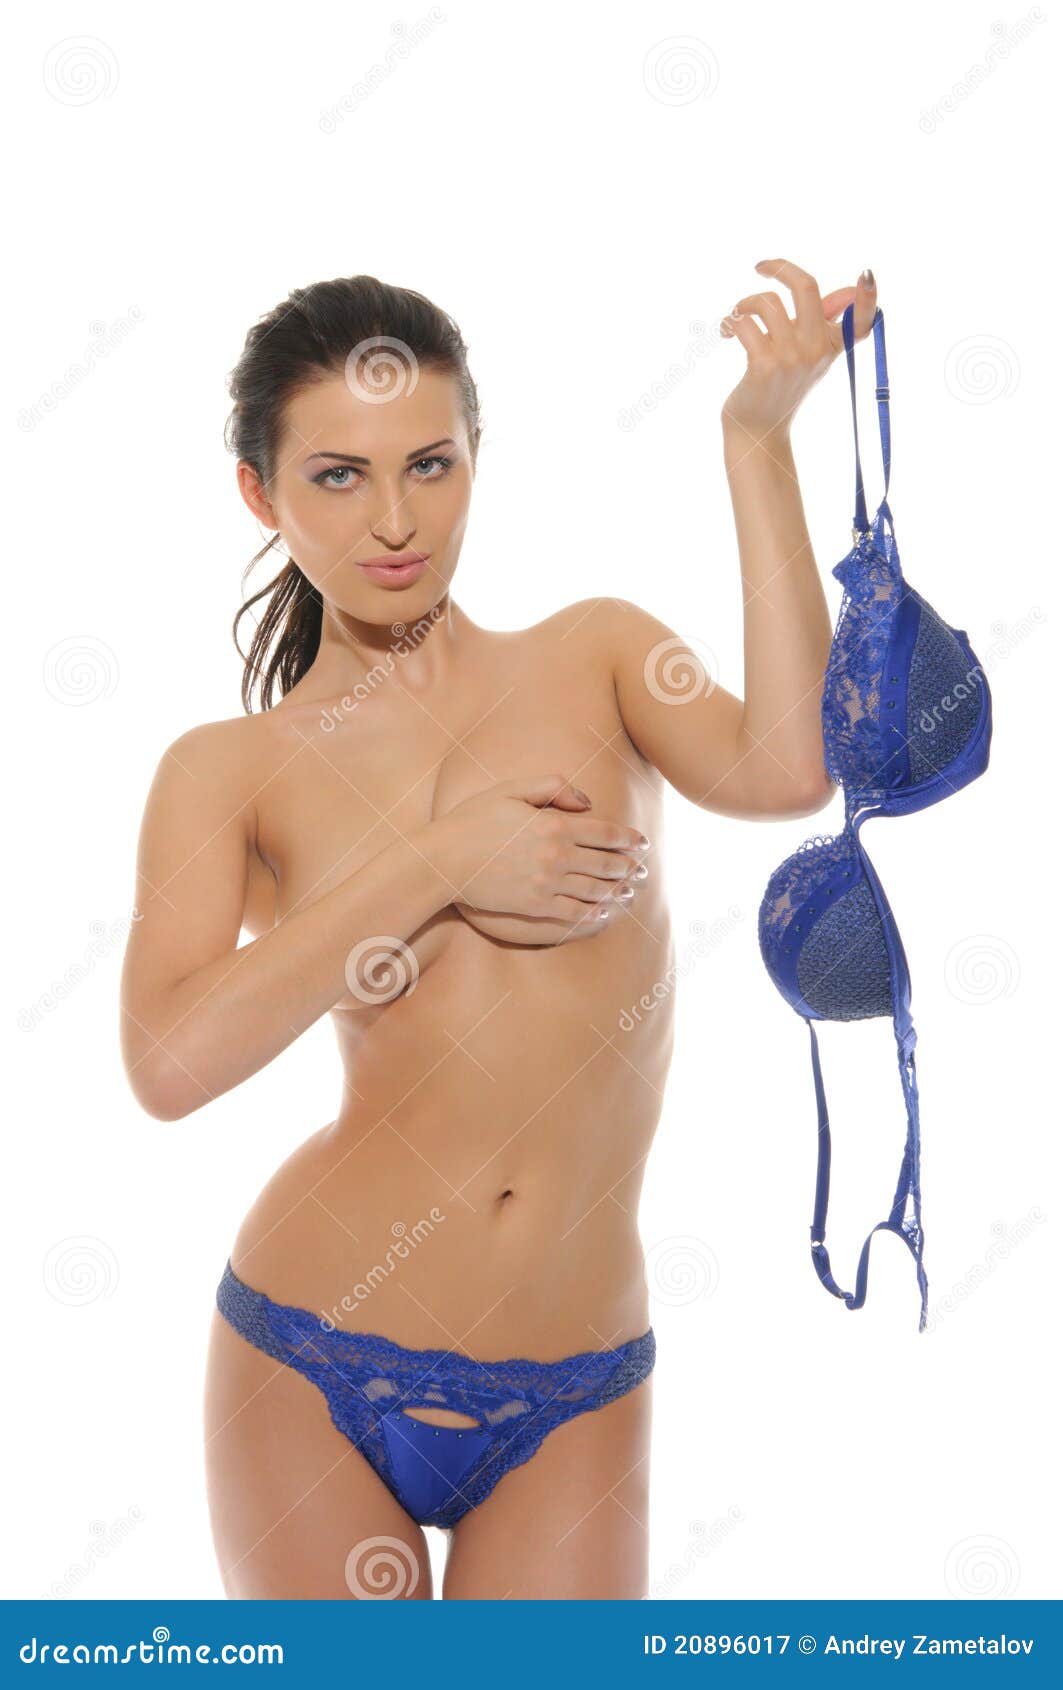 women taking off their bra